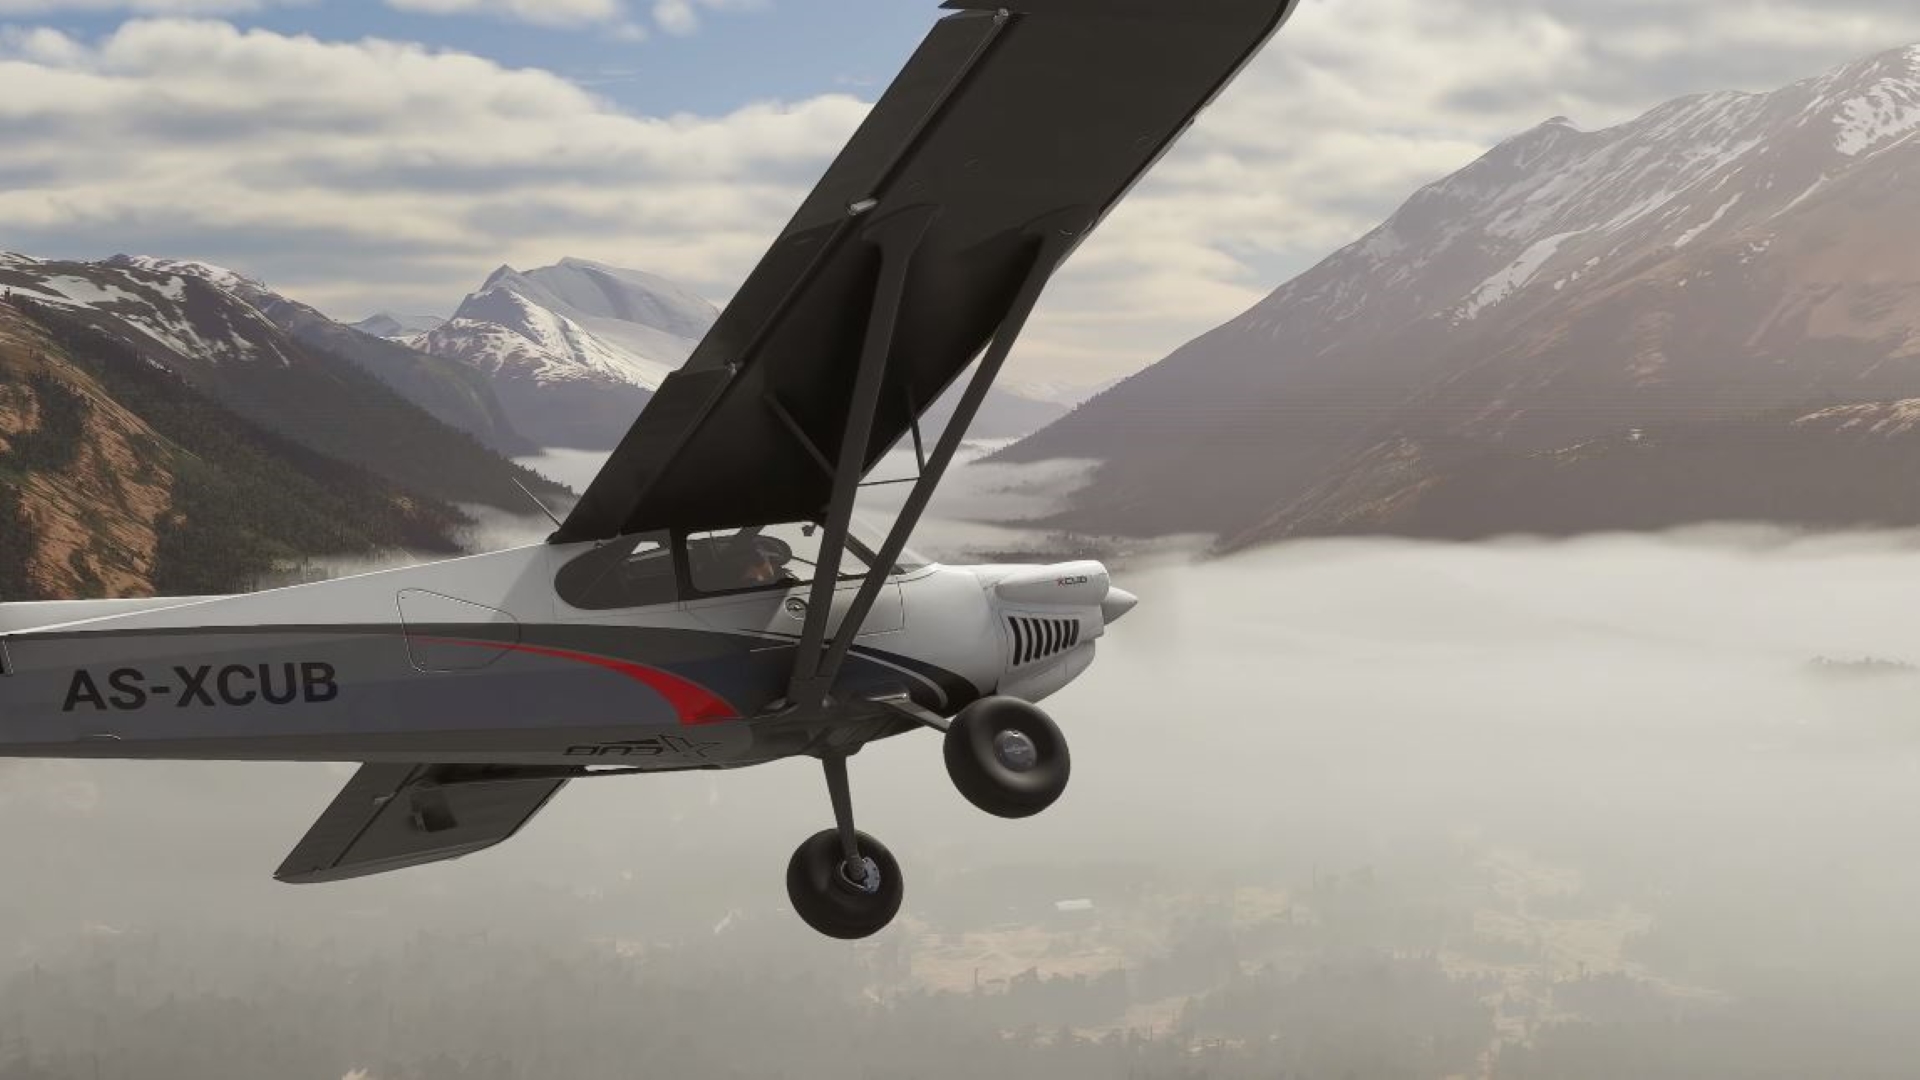 Microsoft Flight Simulator 2020 PC system requirements